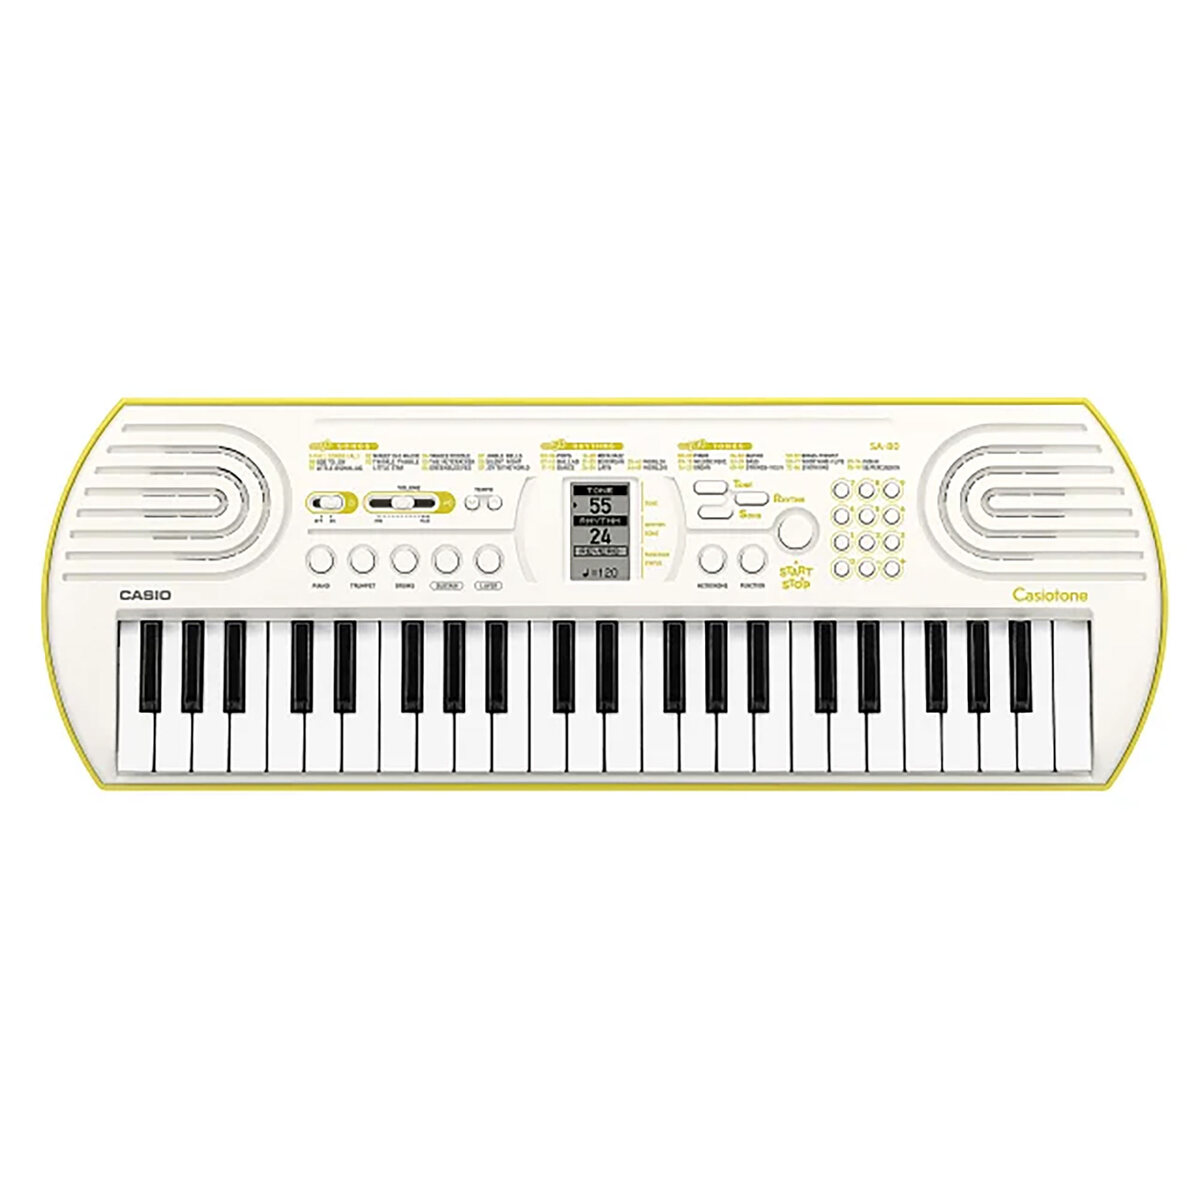 Casio Mini Keyboard with 44 keys, 100 Tones, 50 Rhythms, White, SA-80H2